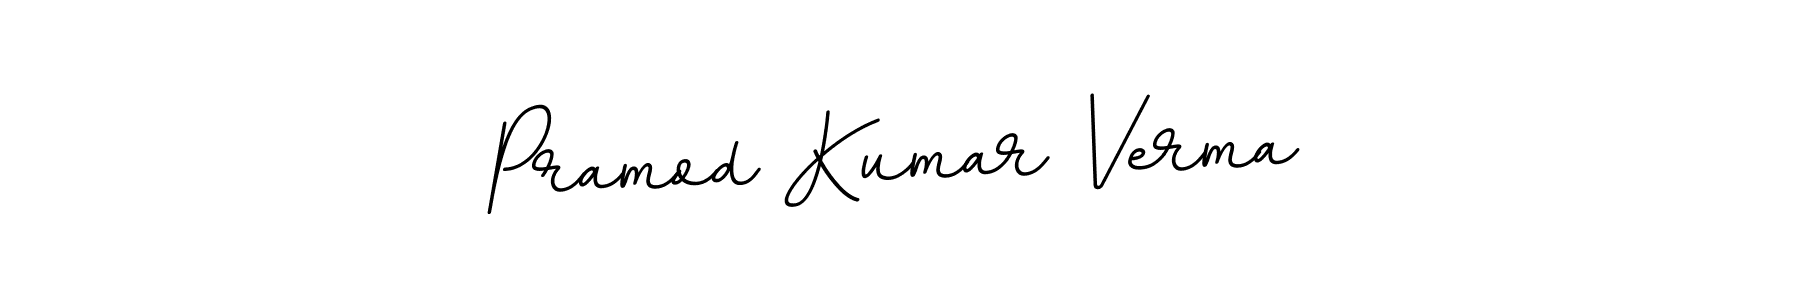 How to Draw Pramod Kumar Verma signature style? BallpointsItalic-DORy9 is a latest design signature styles for name Pramod Kumar Verma. Pramod Kumar Verma signature style 11 images and pictures png